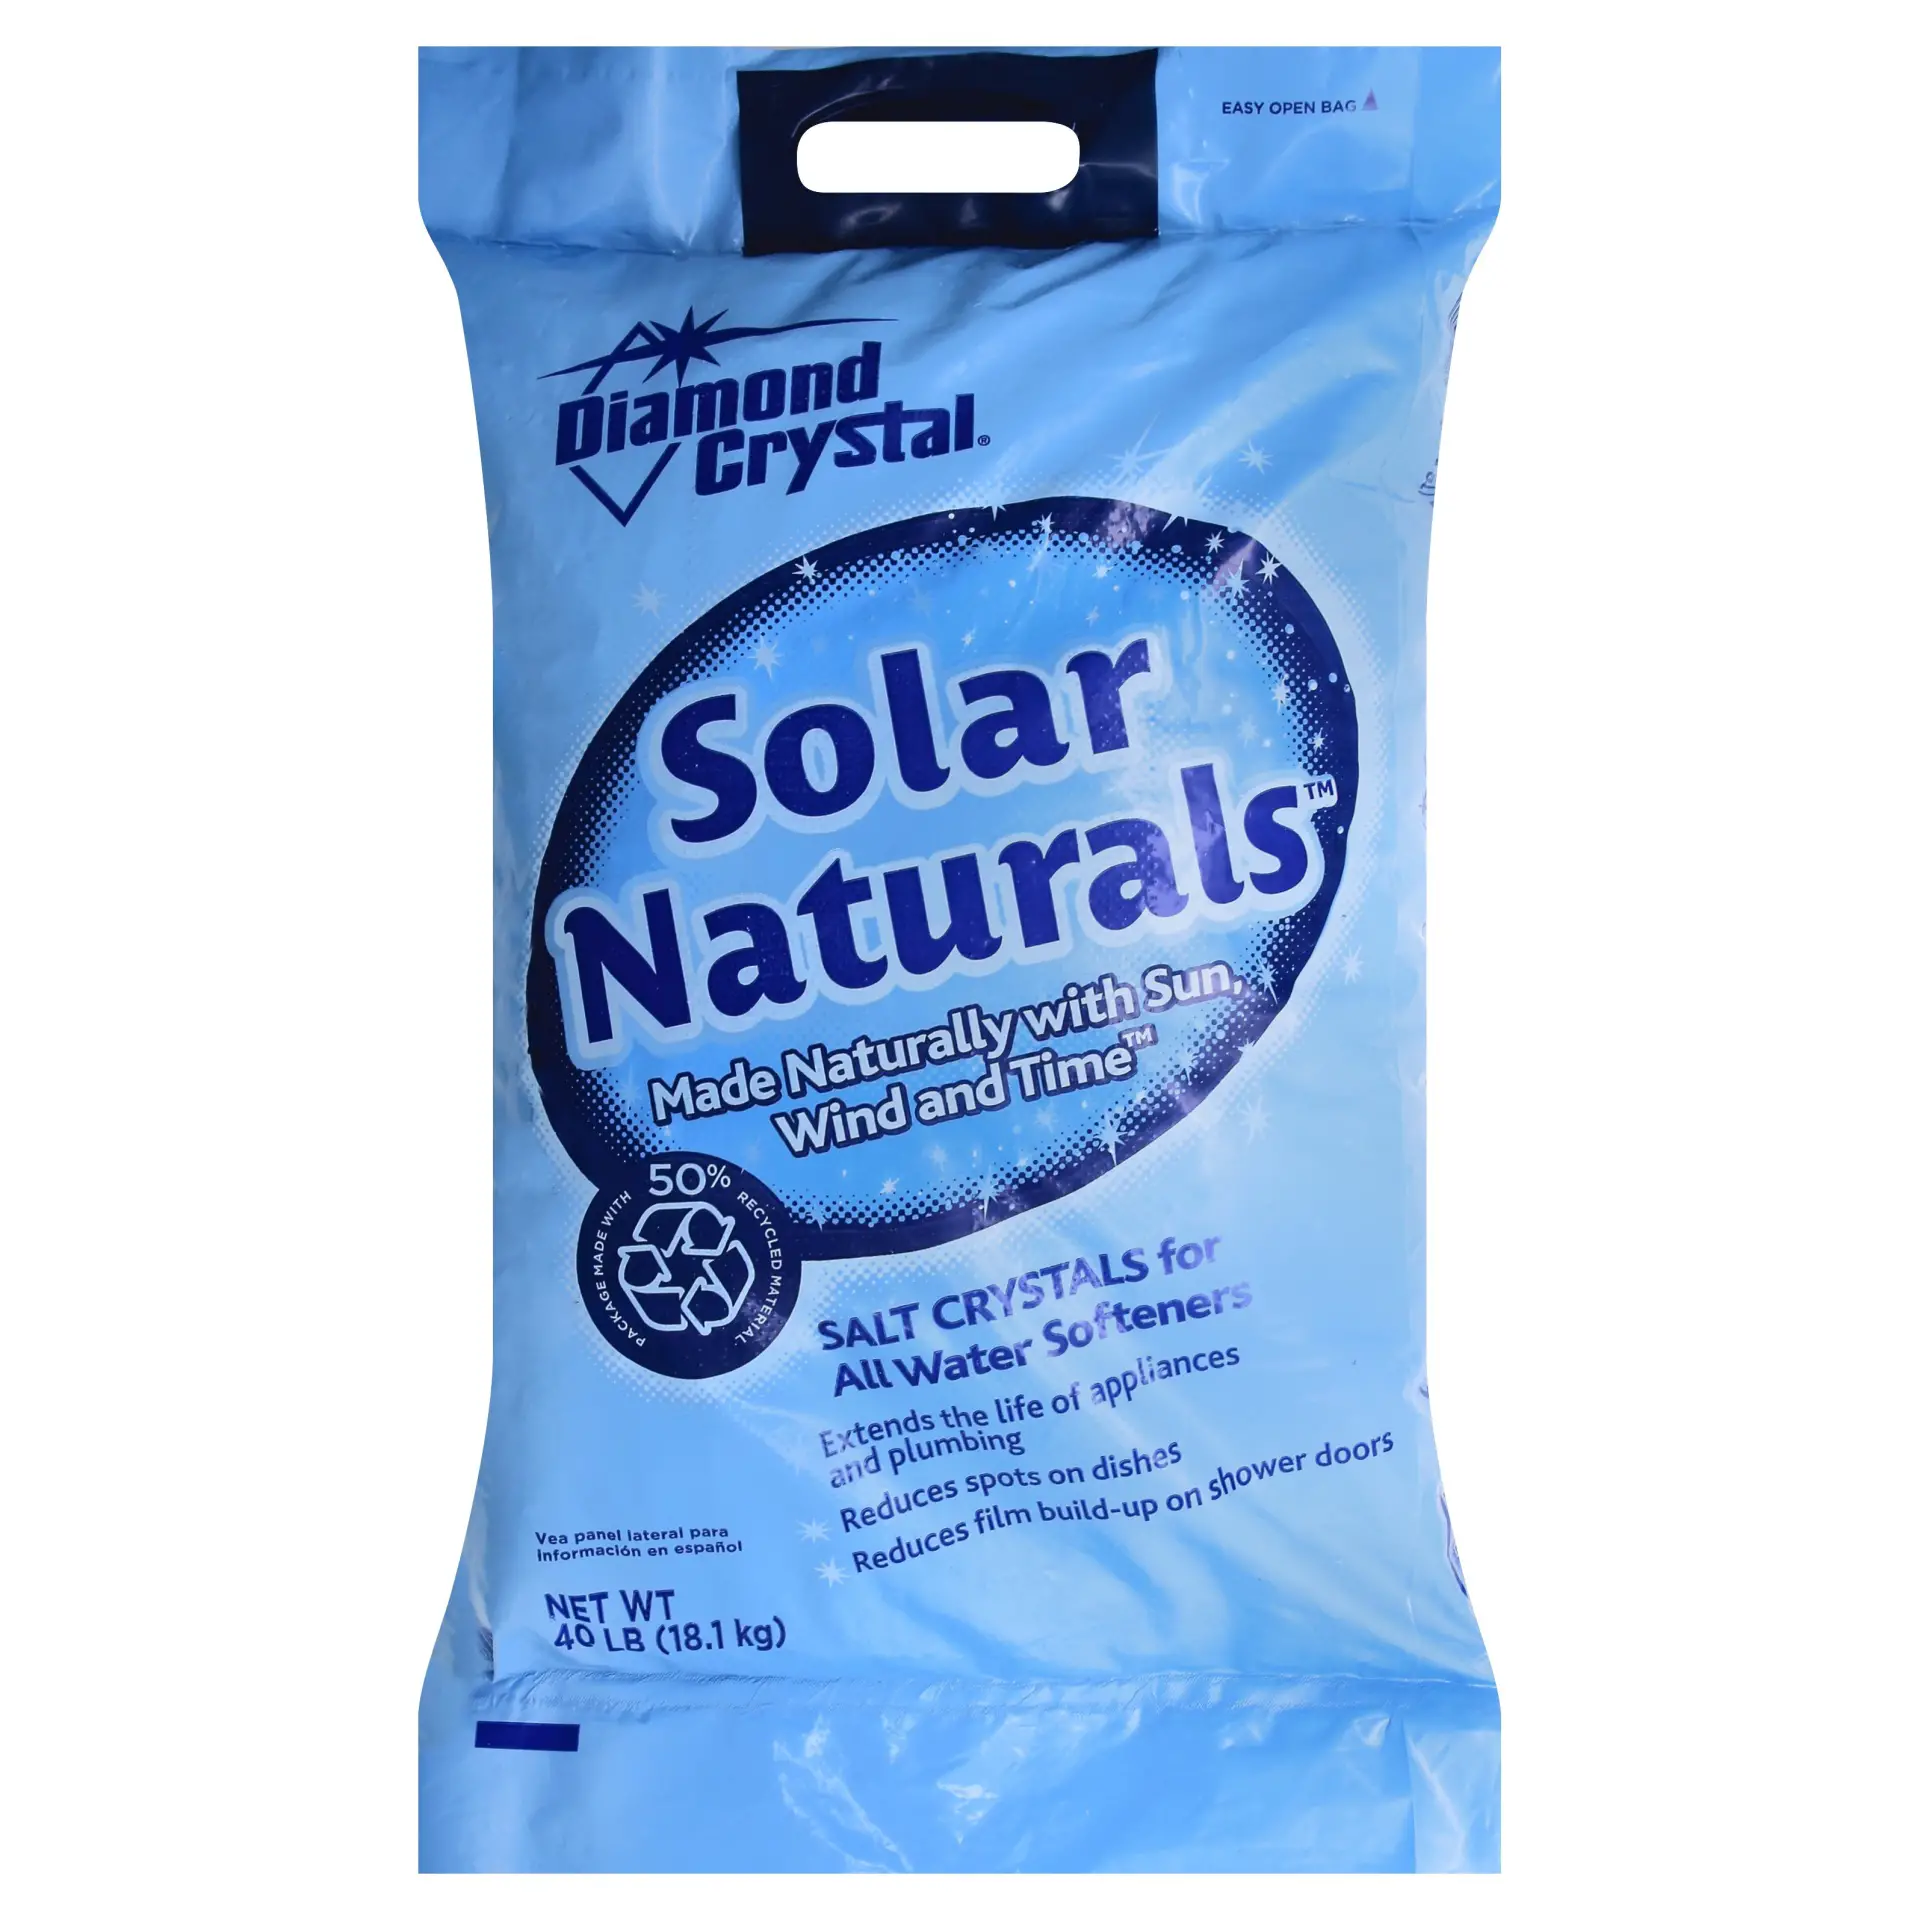 Diamond Crystal Solar Naturals Water Softener Salt Crystals 40 lb